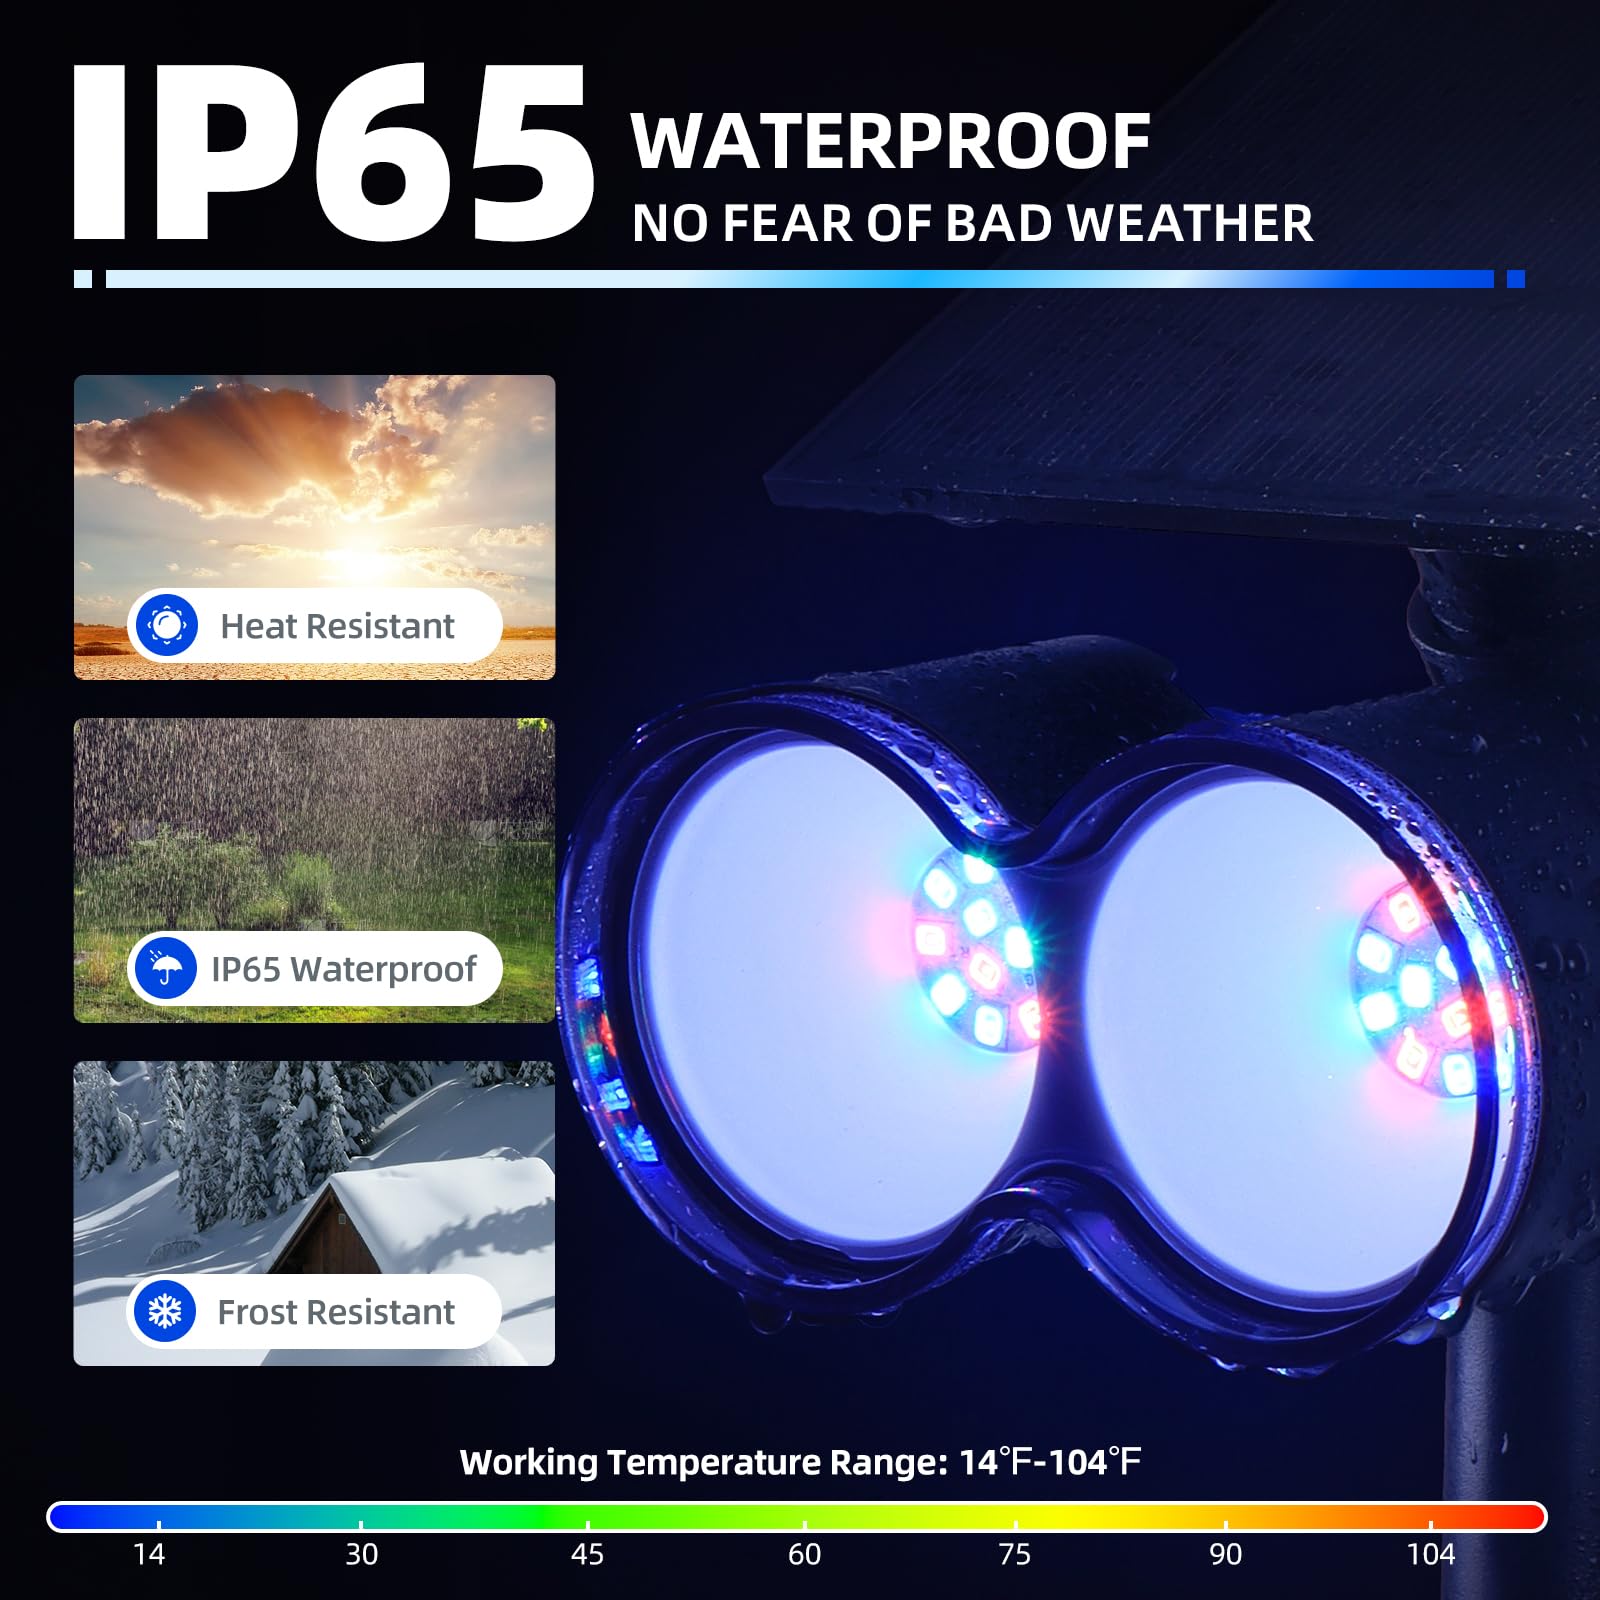 Solar Spot Lights,RGB 8 Colorful Modes,360°Horizontal Adjustable,Auto ON/OFF,4 Packs,WX RGB 4